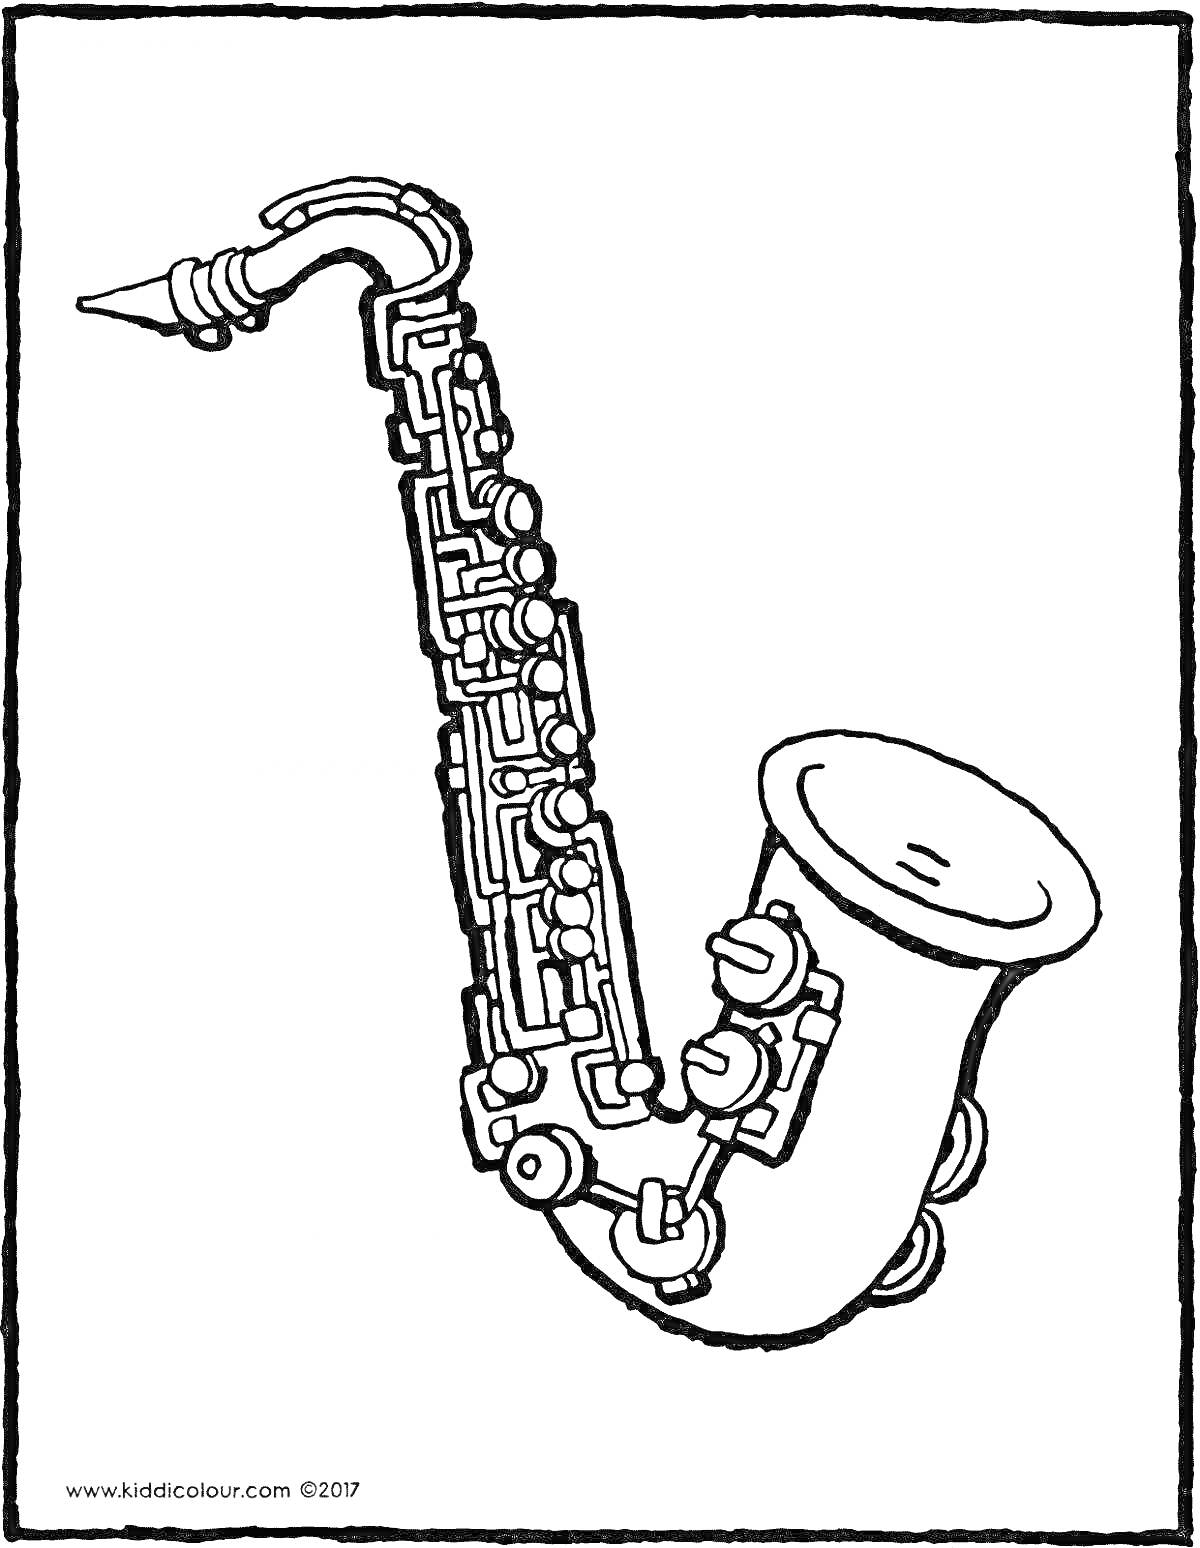 Раскраска Саксофон с мундштуком и клапанами